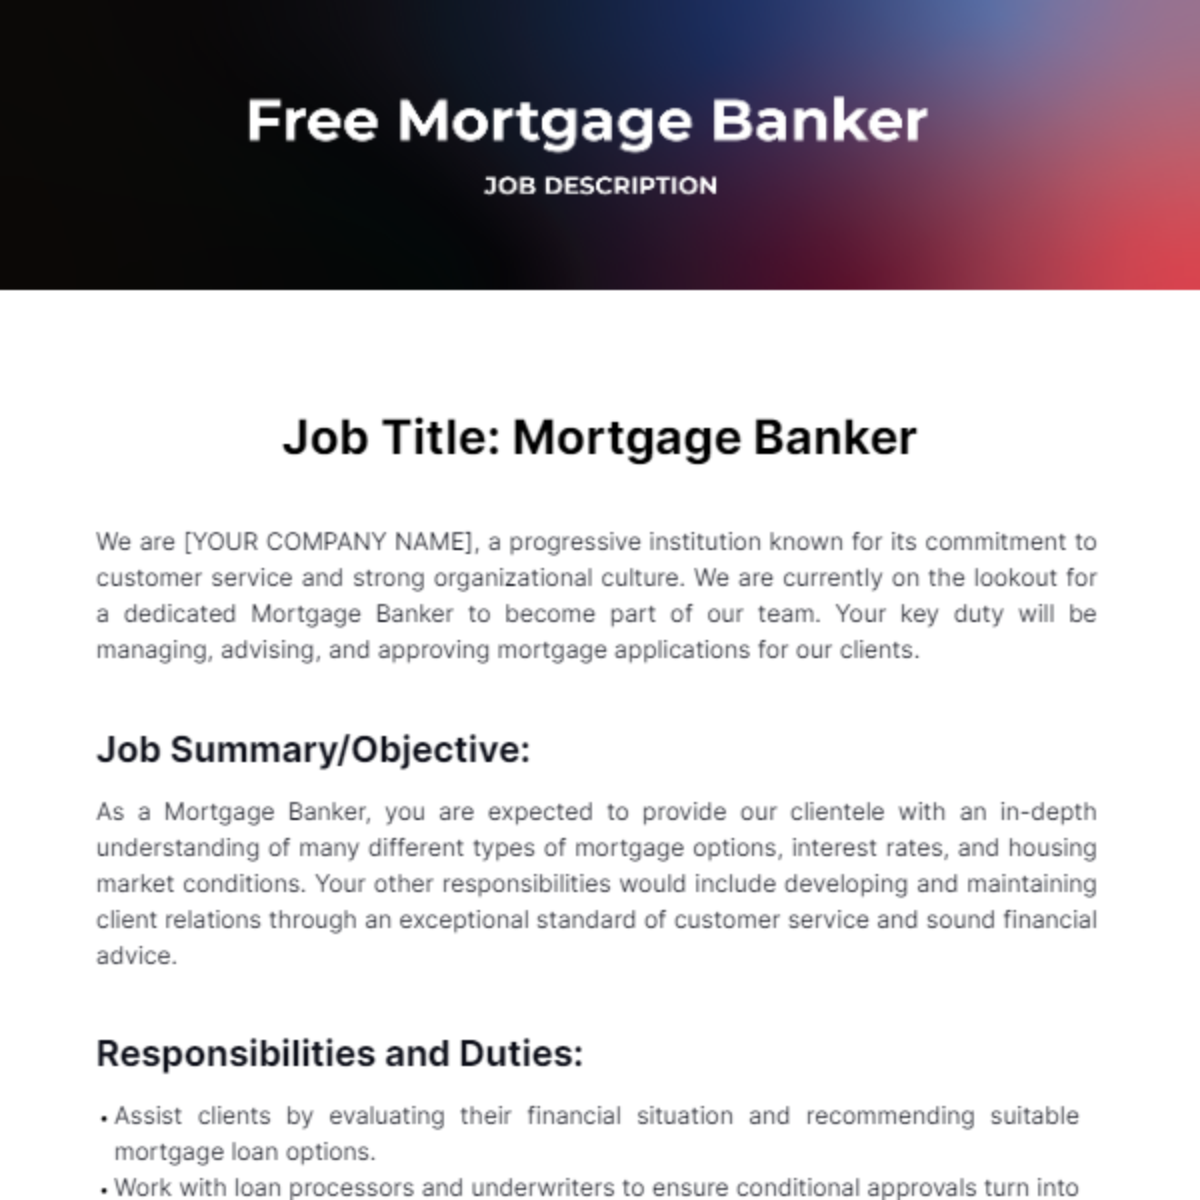 Free Mortgage Banker Job Description Template